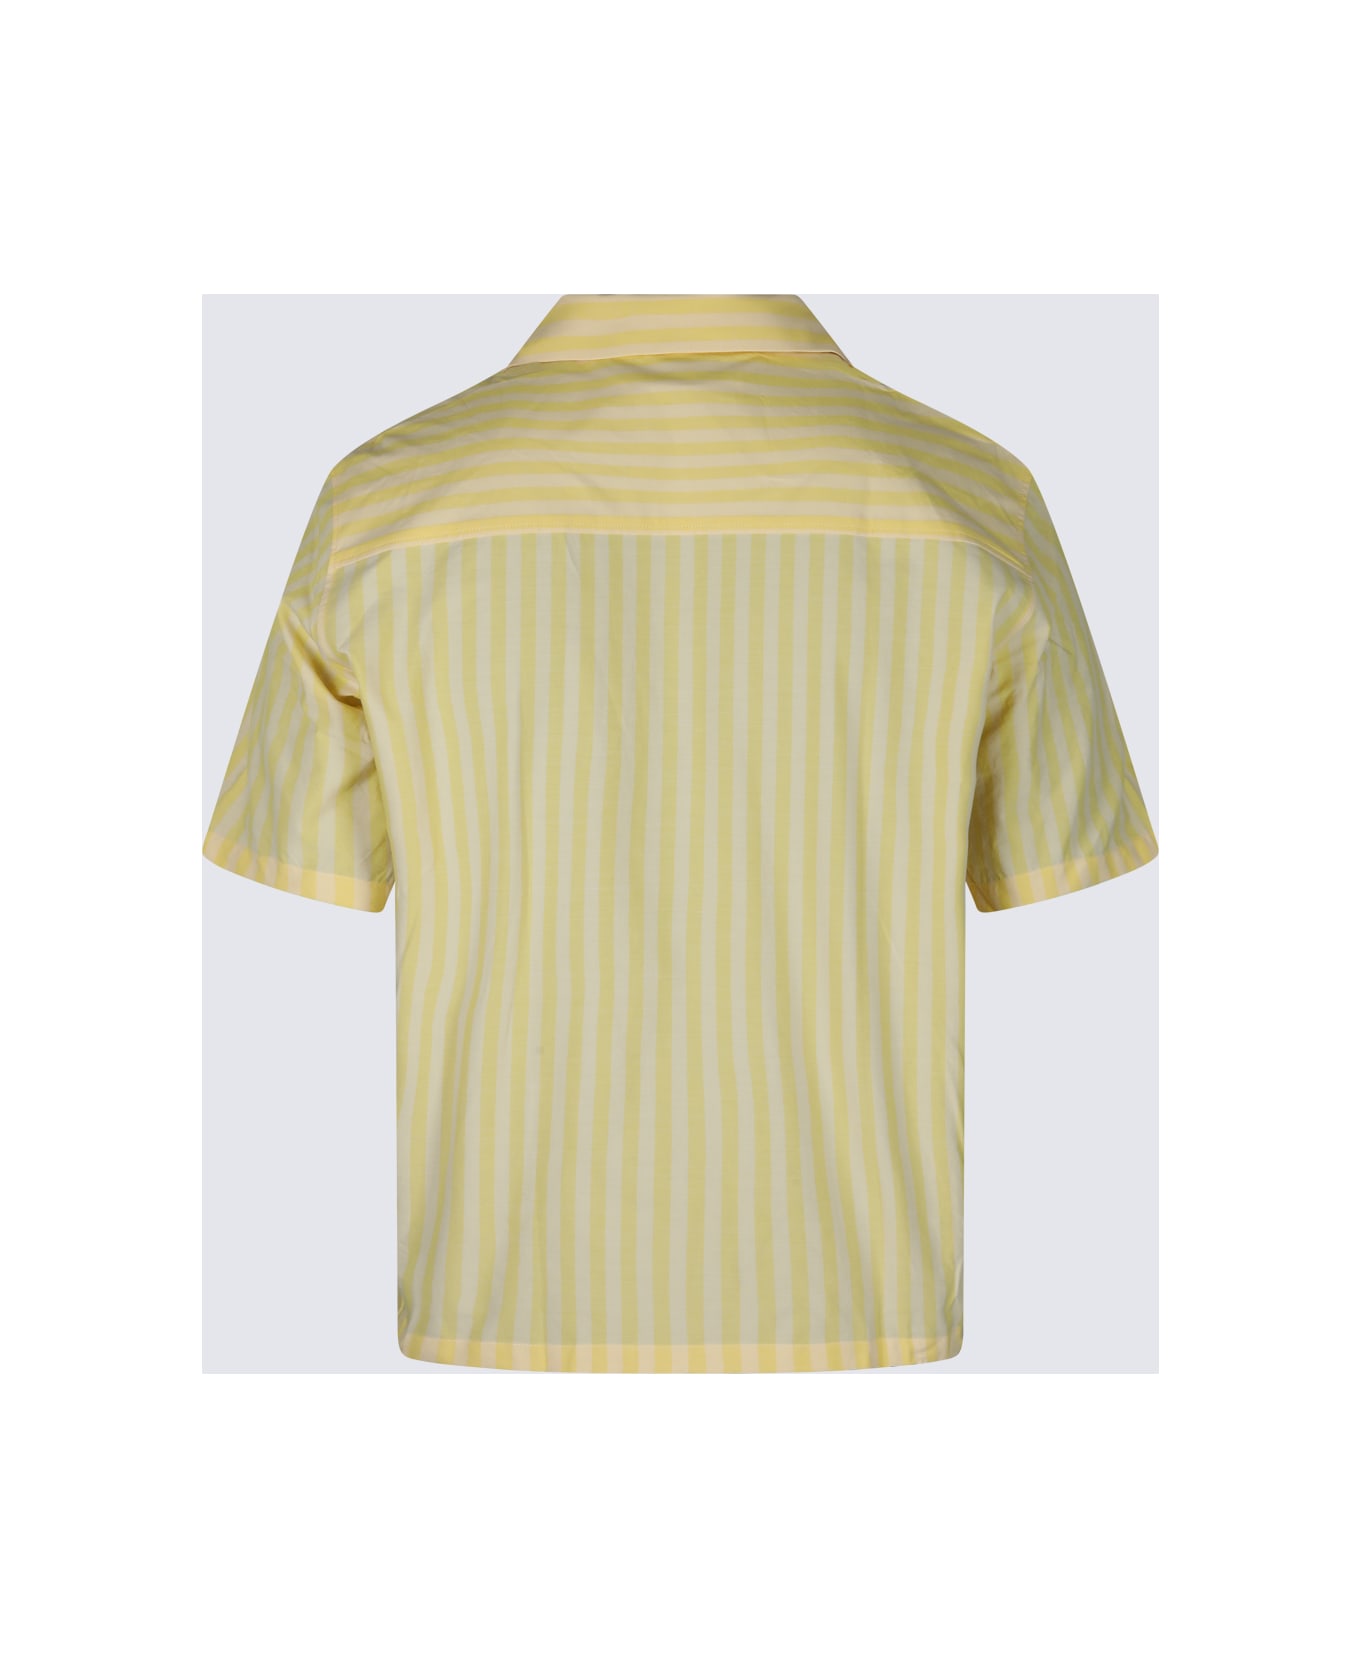 Maison Kitsuné Light Yellow Shirt - LIGHT YELLOW STRIPES